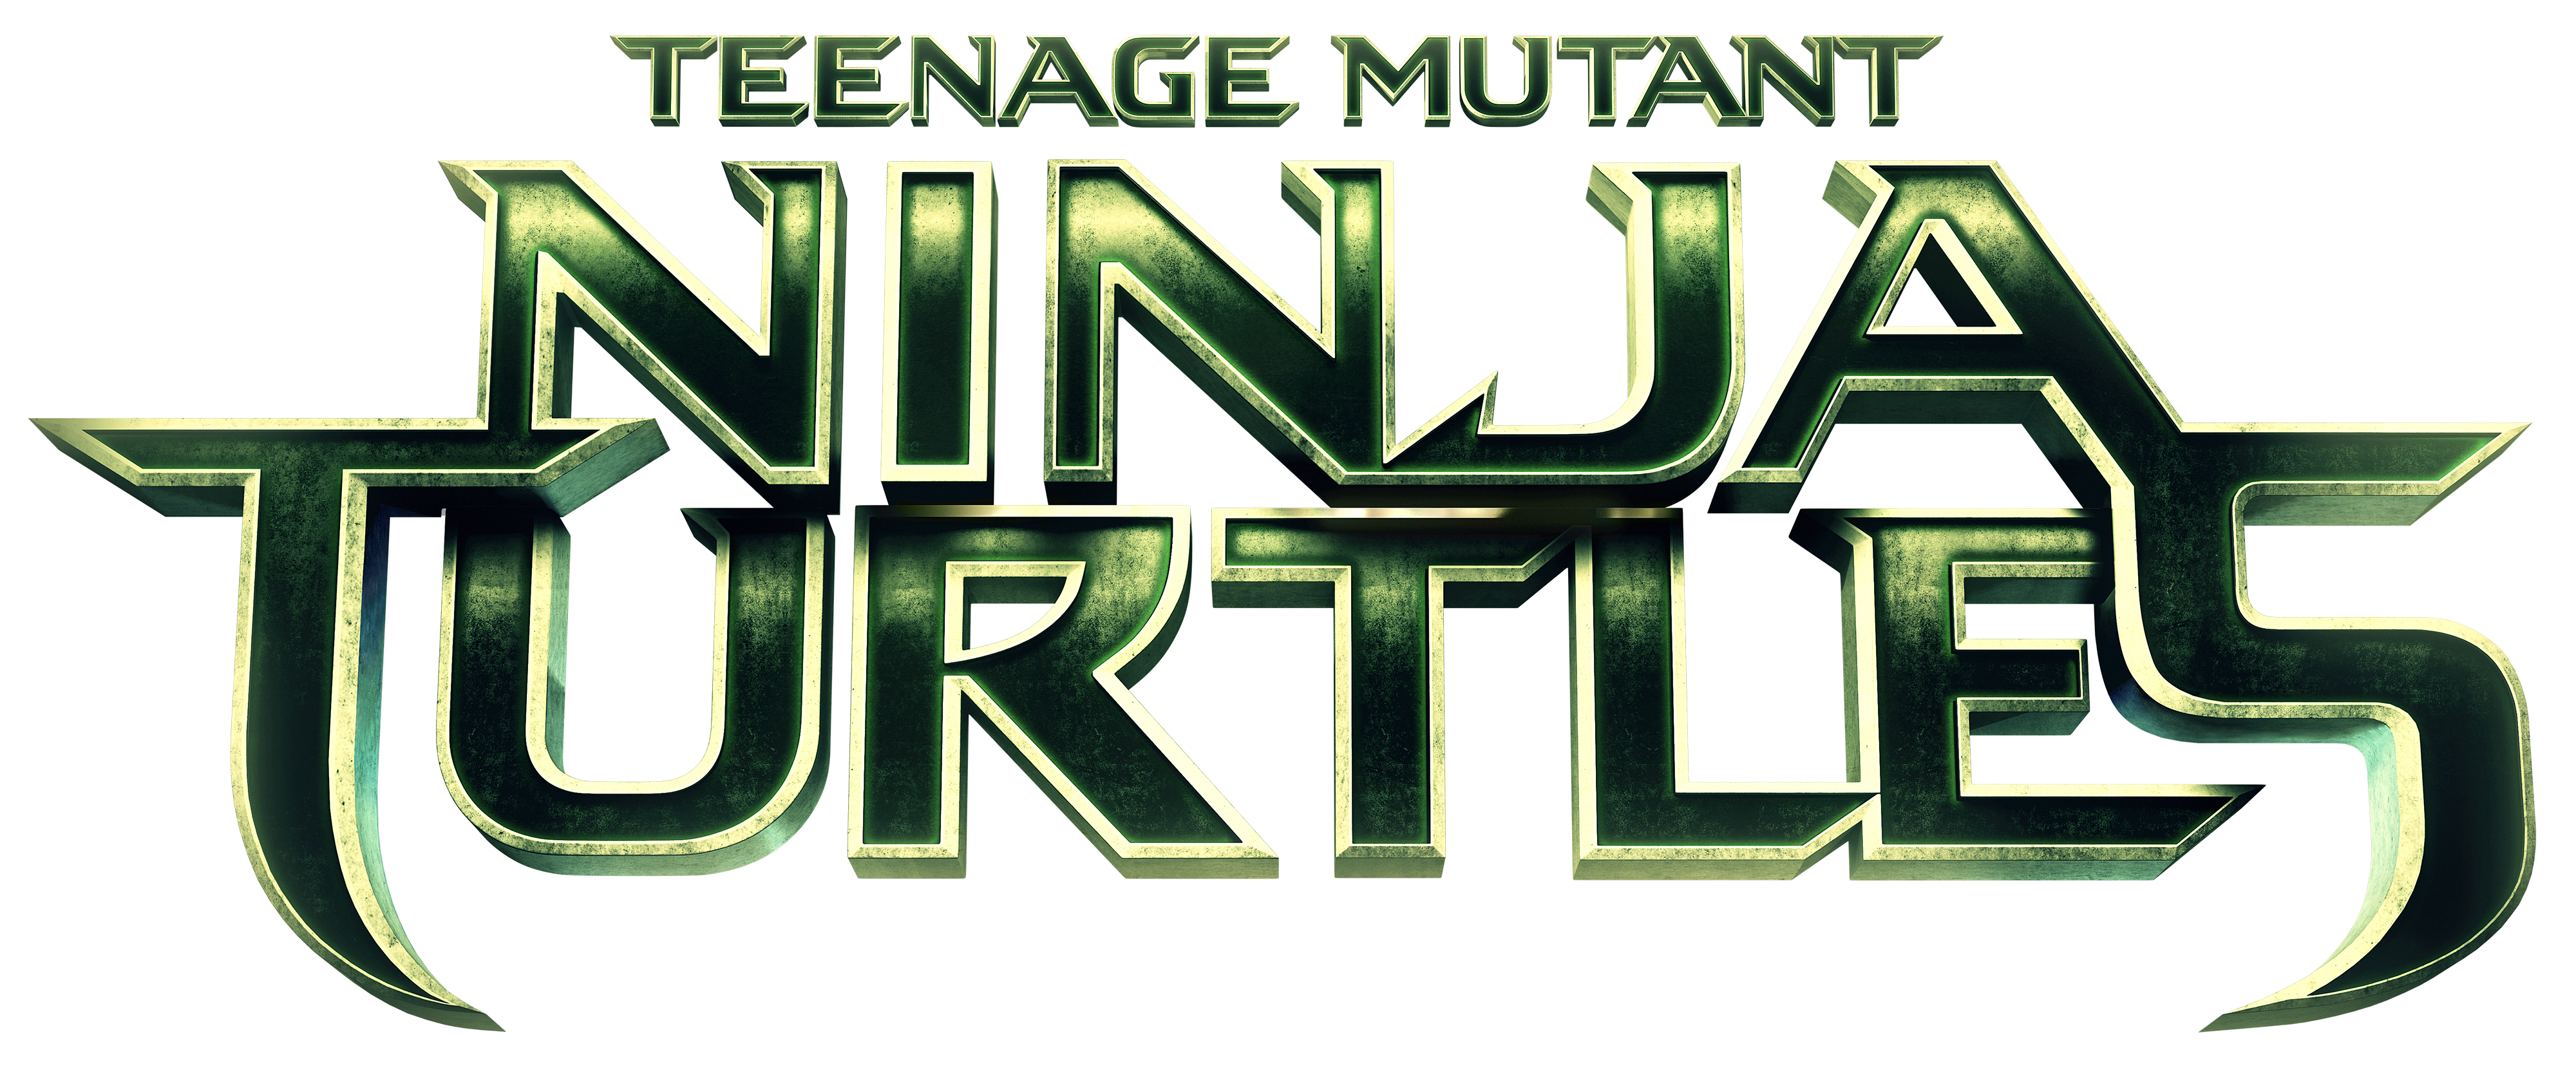 TEENAGE MUTANT NINJA Turtles Blu Ray Combo Pack Hits Streets December 2014. Tales Of A Ranting Ginger